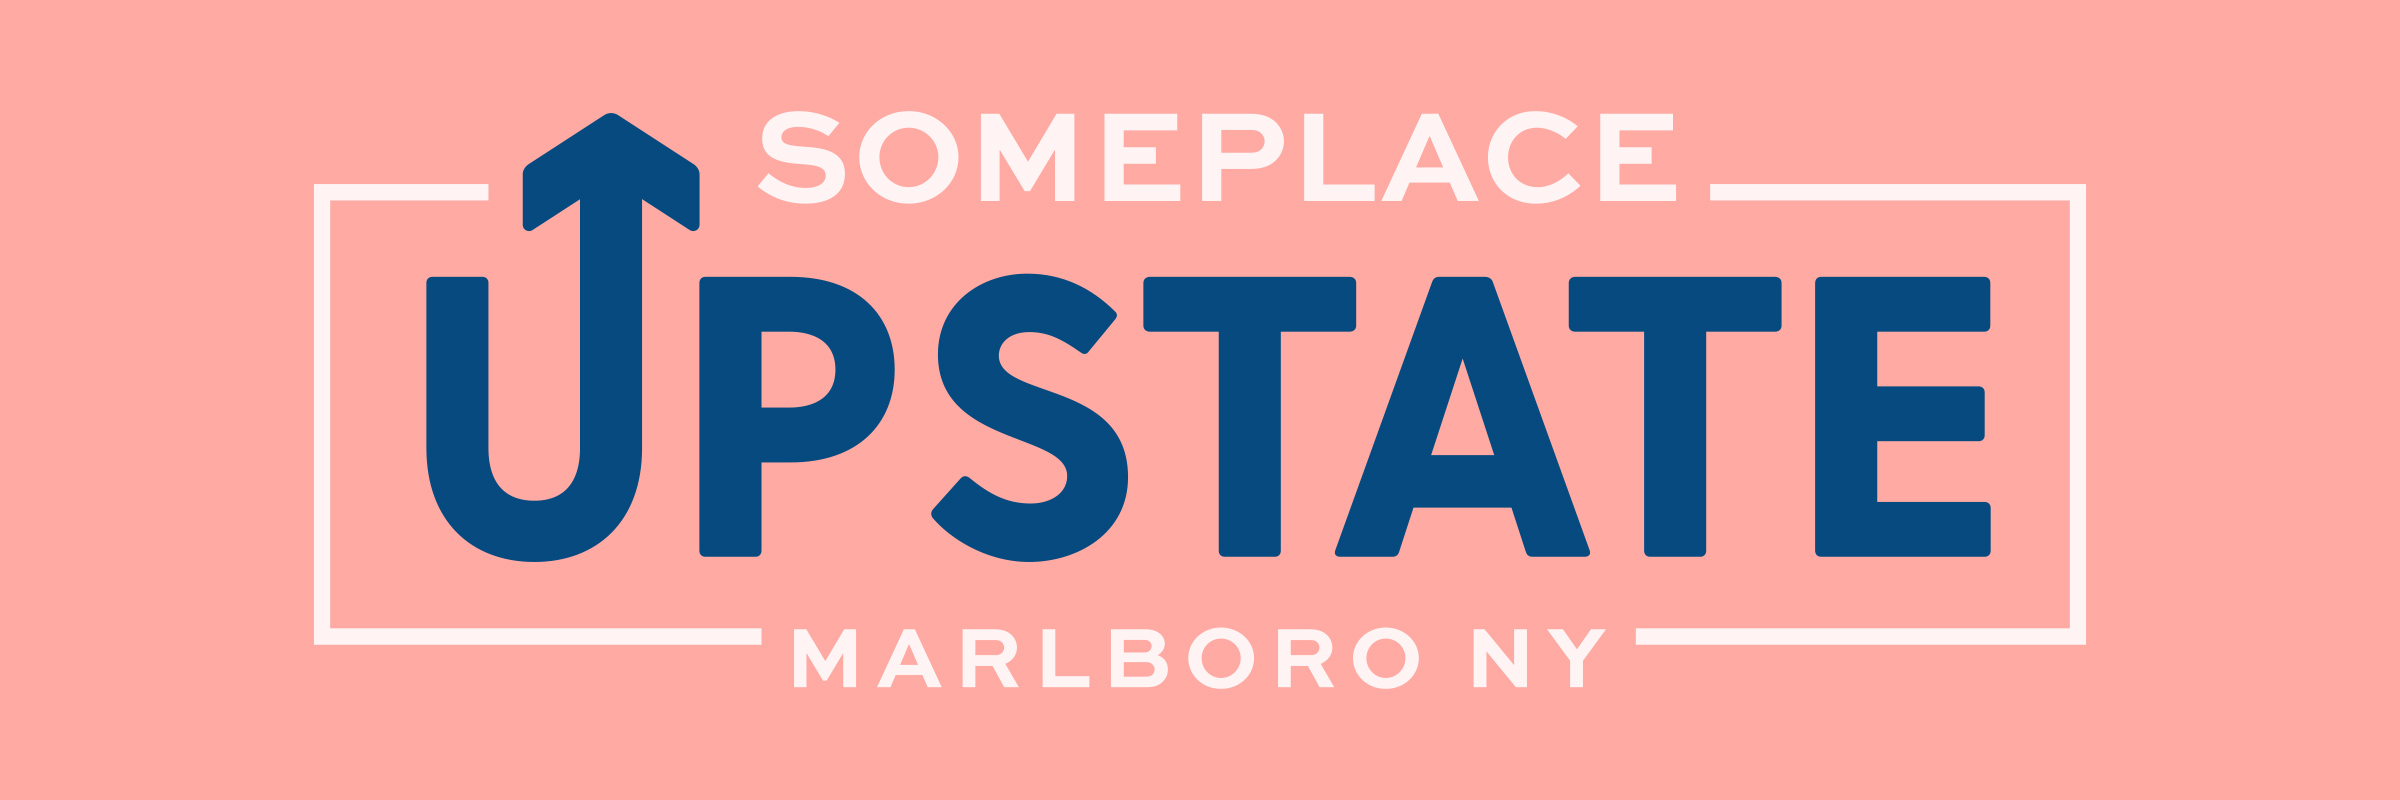 Someplace Upstate Logo - Horizontal